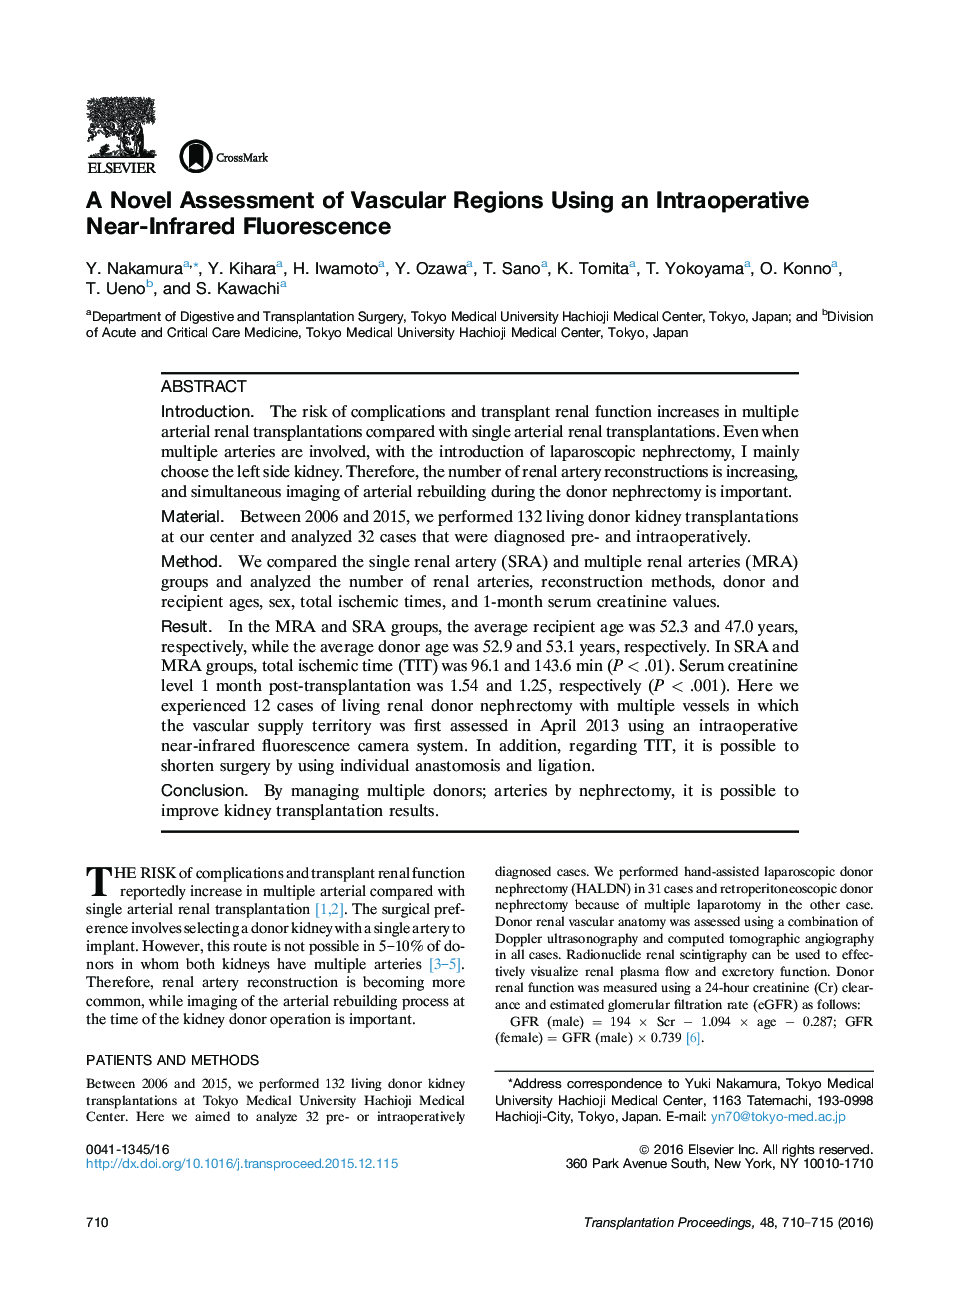 A Novel Assessment of Vascular Regions Using an Intraoperative Near-Infrared Fluorescence